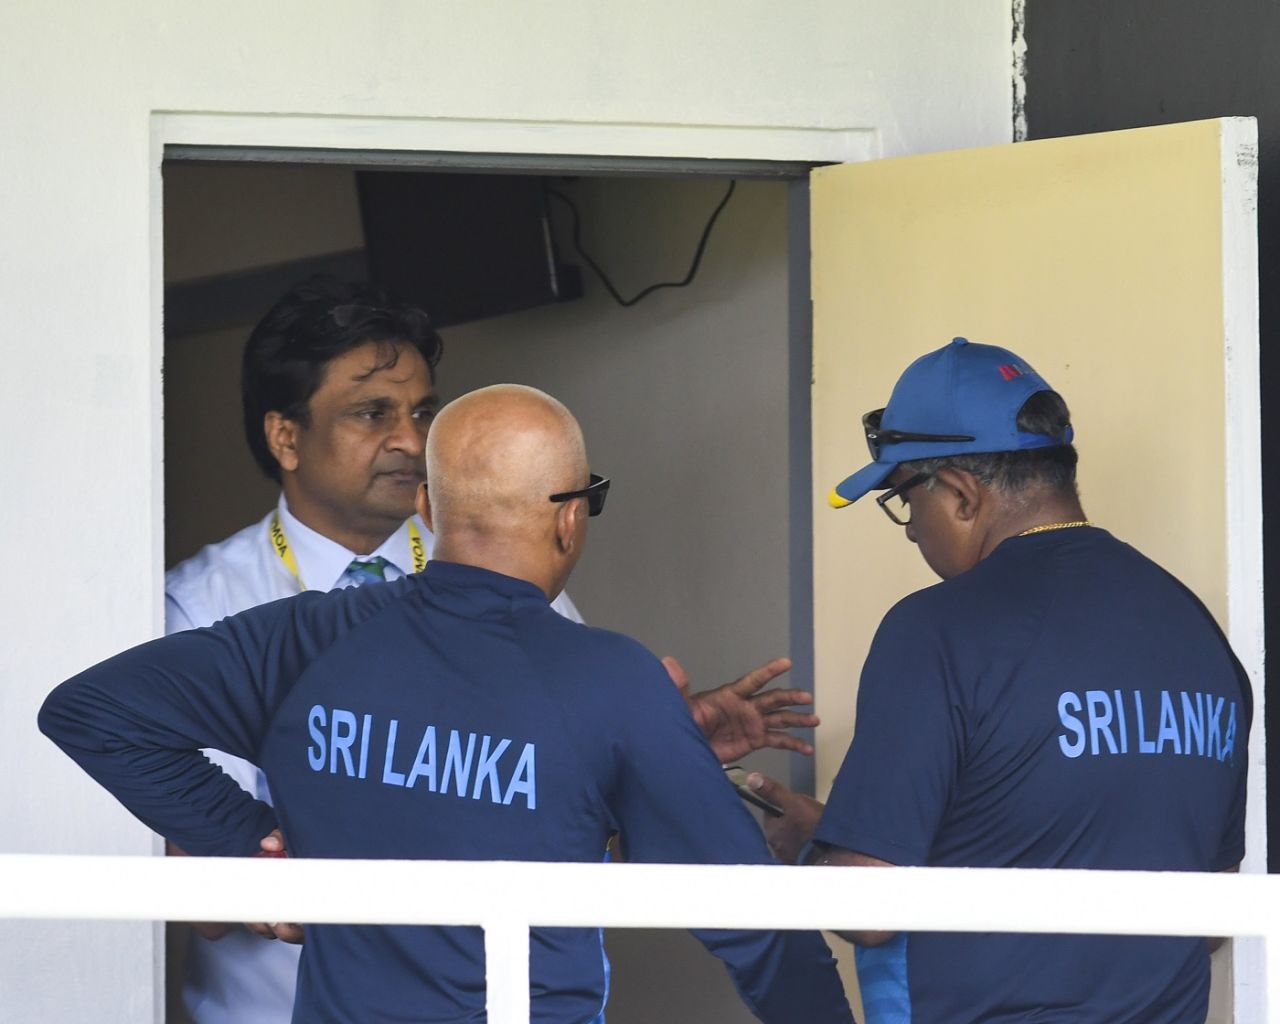 Match referee Javagal Srinath in conversation with Sri Lanka coach Chandika Hathurusingha, West Indies v Sri Lanka, 2nd Test, Gros Islet, 3rd day, June 16, 2018